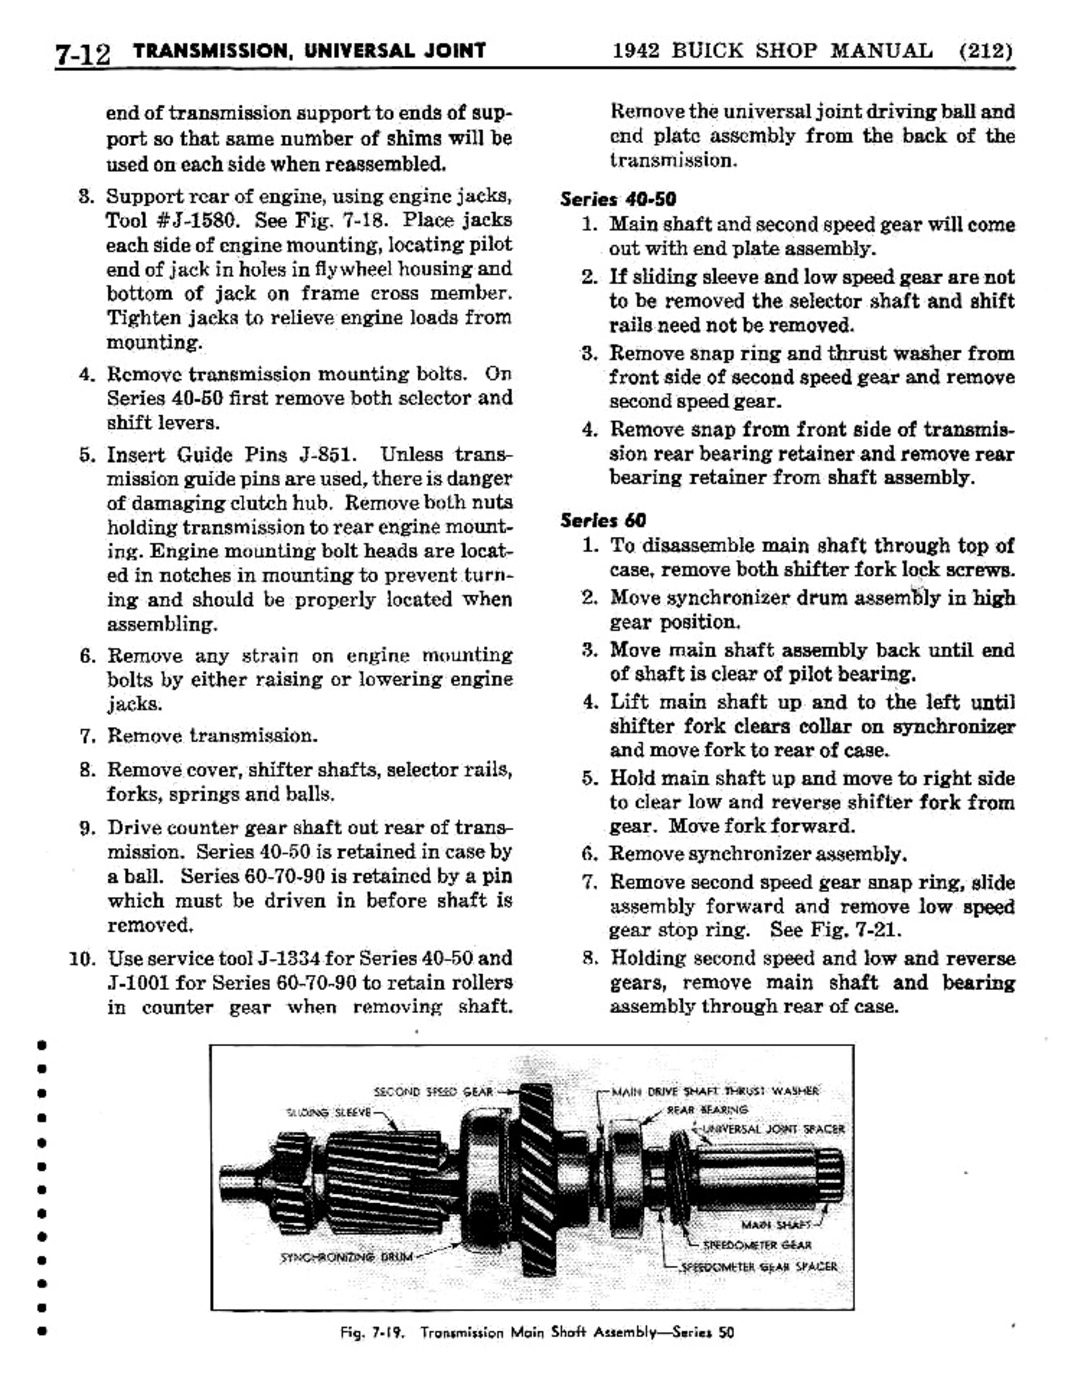 n_08 1942 Buick Shop Manual - Transmission-012-012.jpg